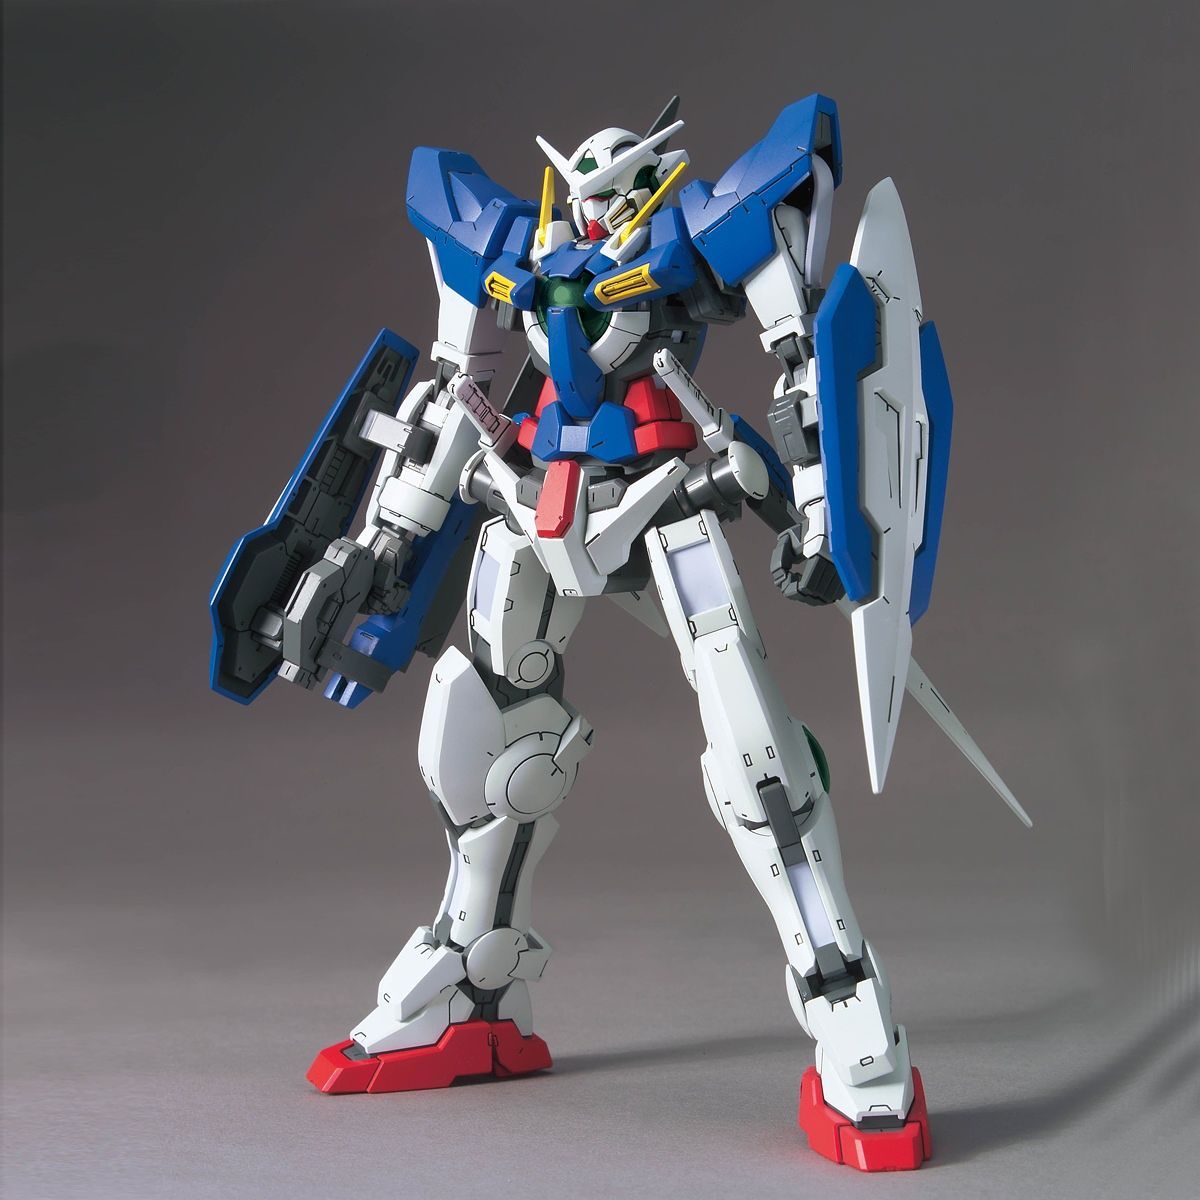 1/100 Scale model - GN-001 Gundam Exia